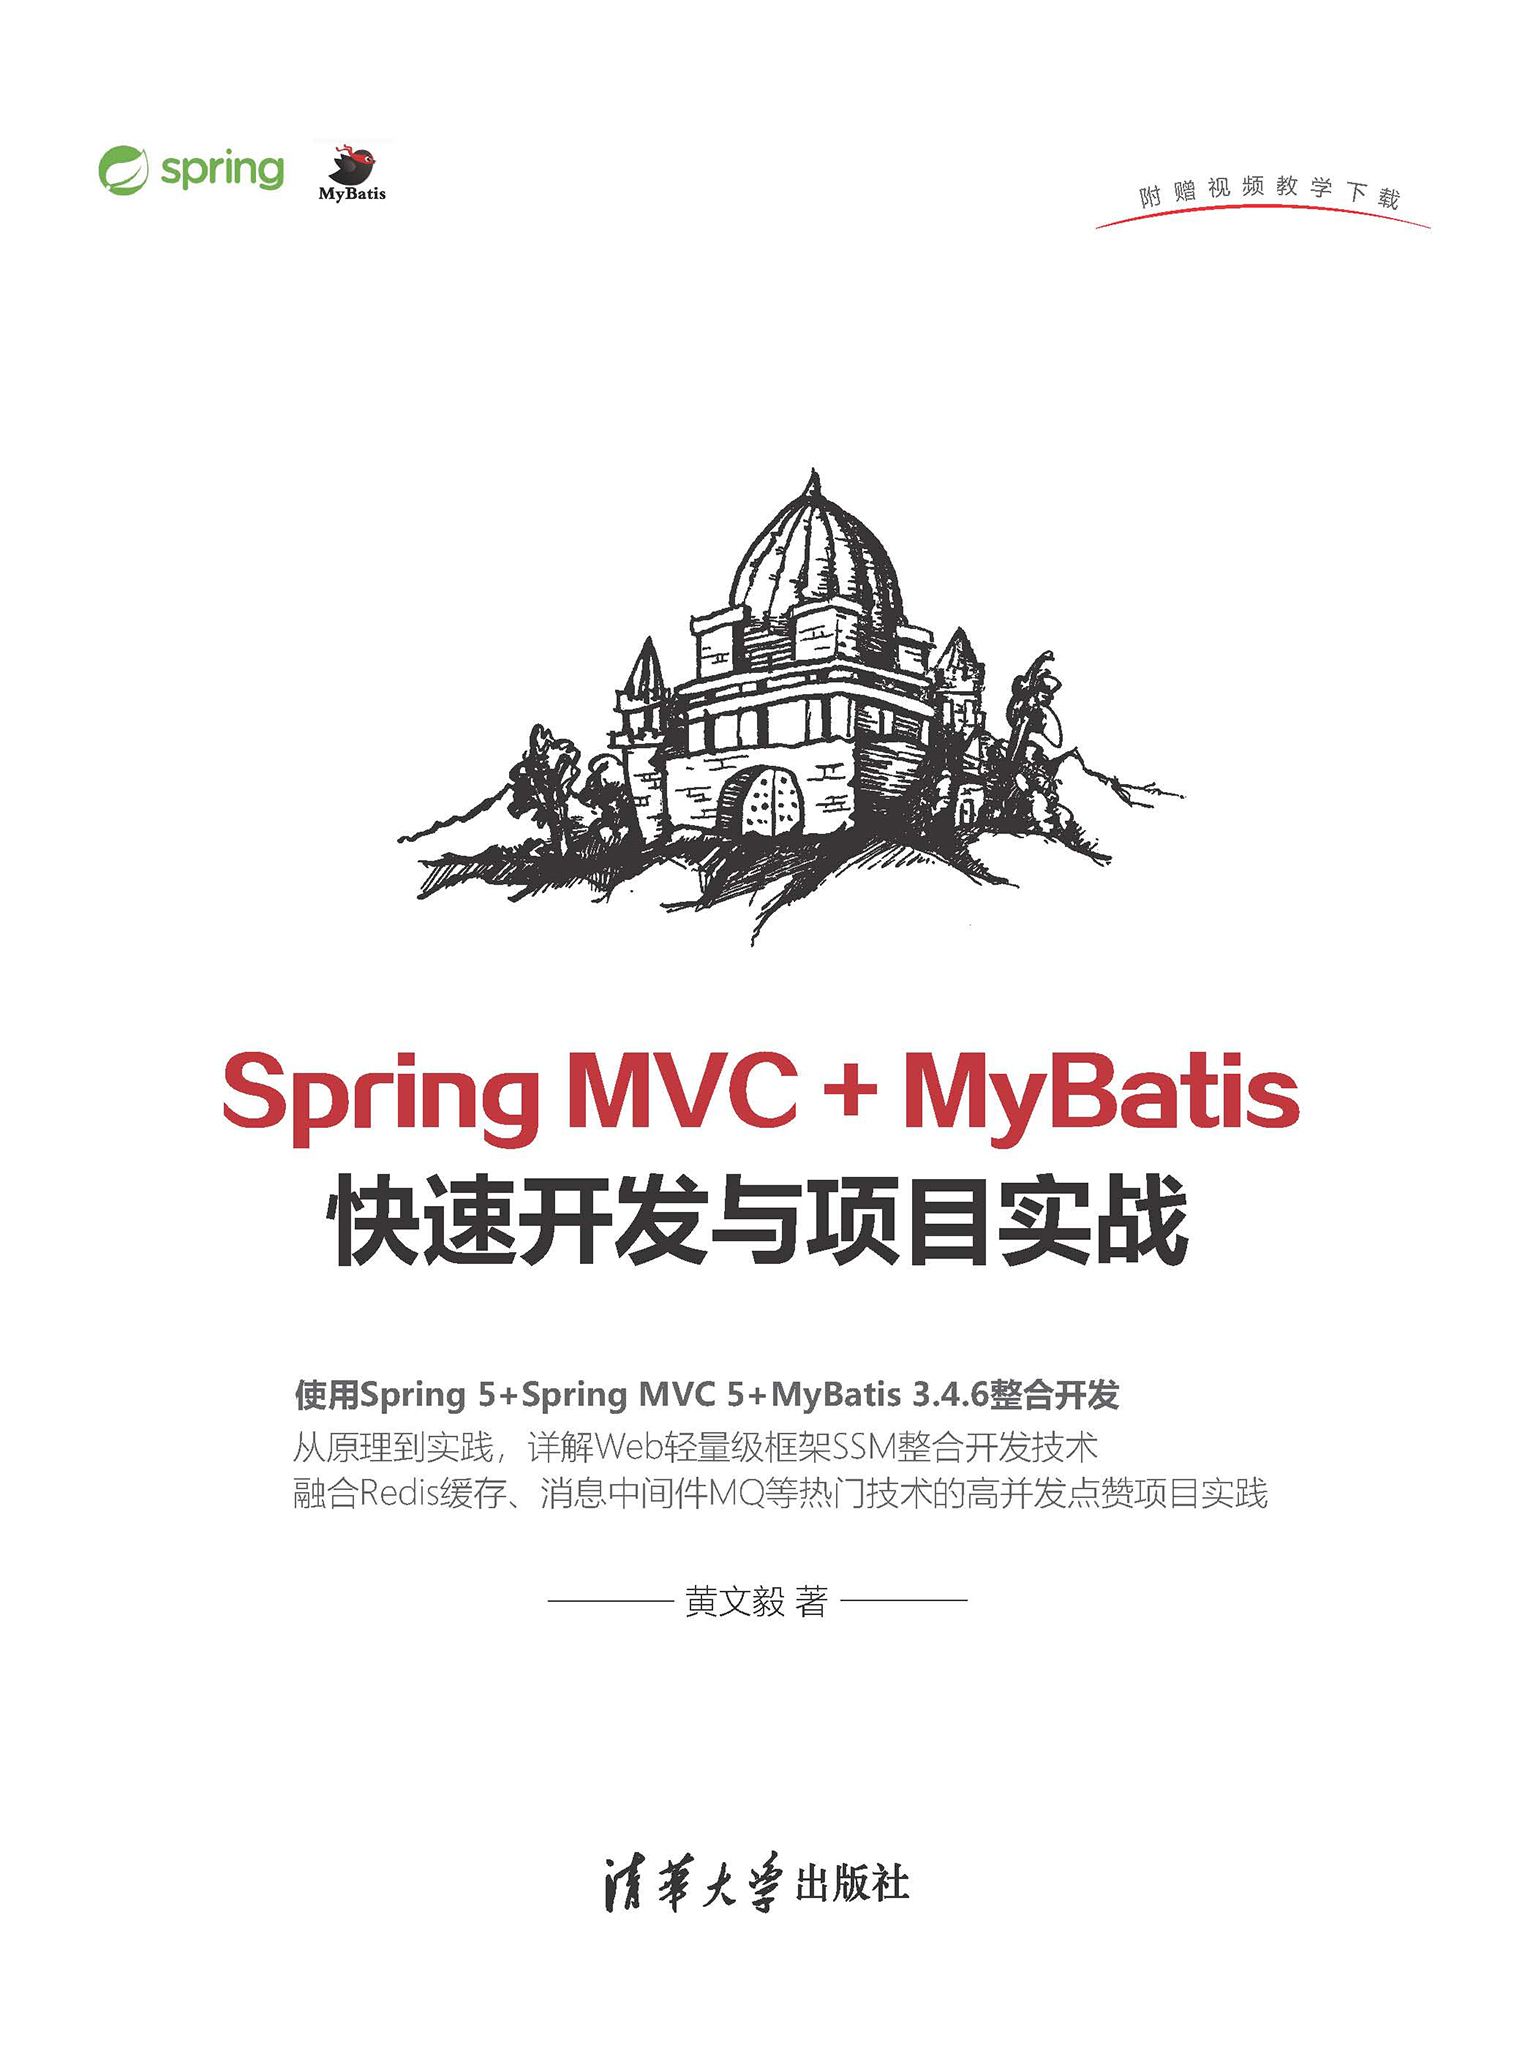 Spring MVC + MyBatis快速开发与项目实战